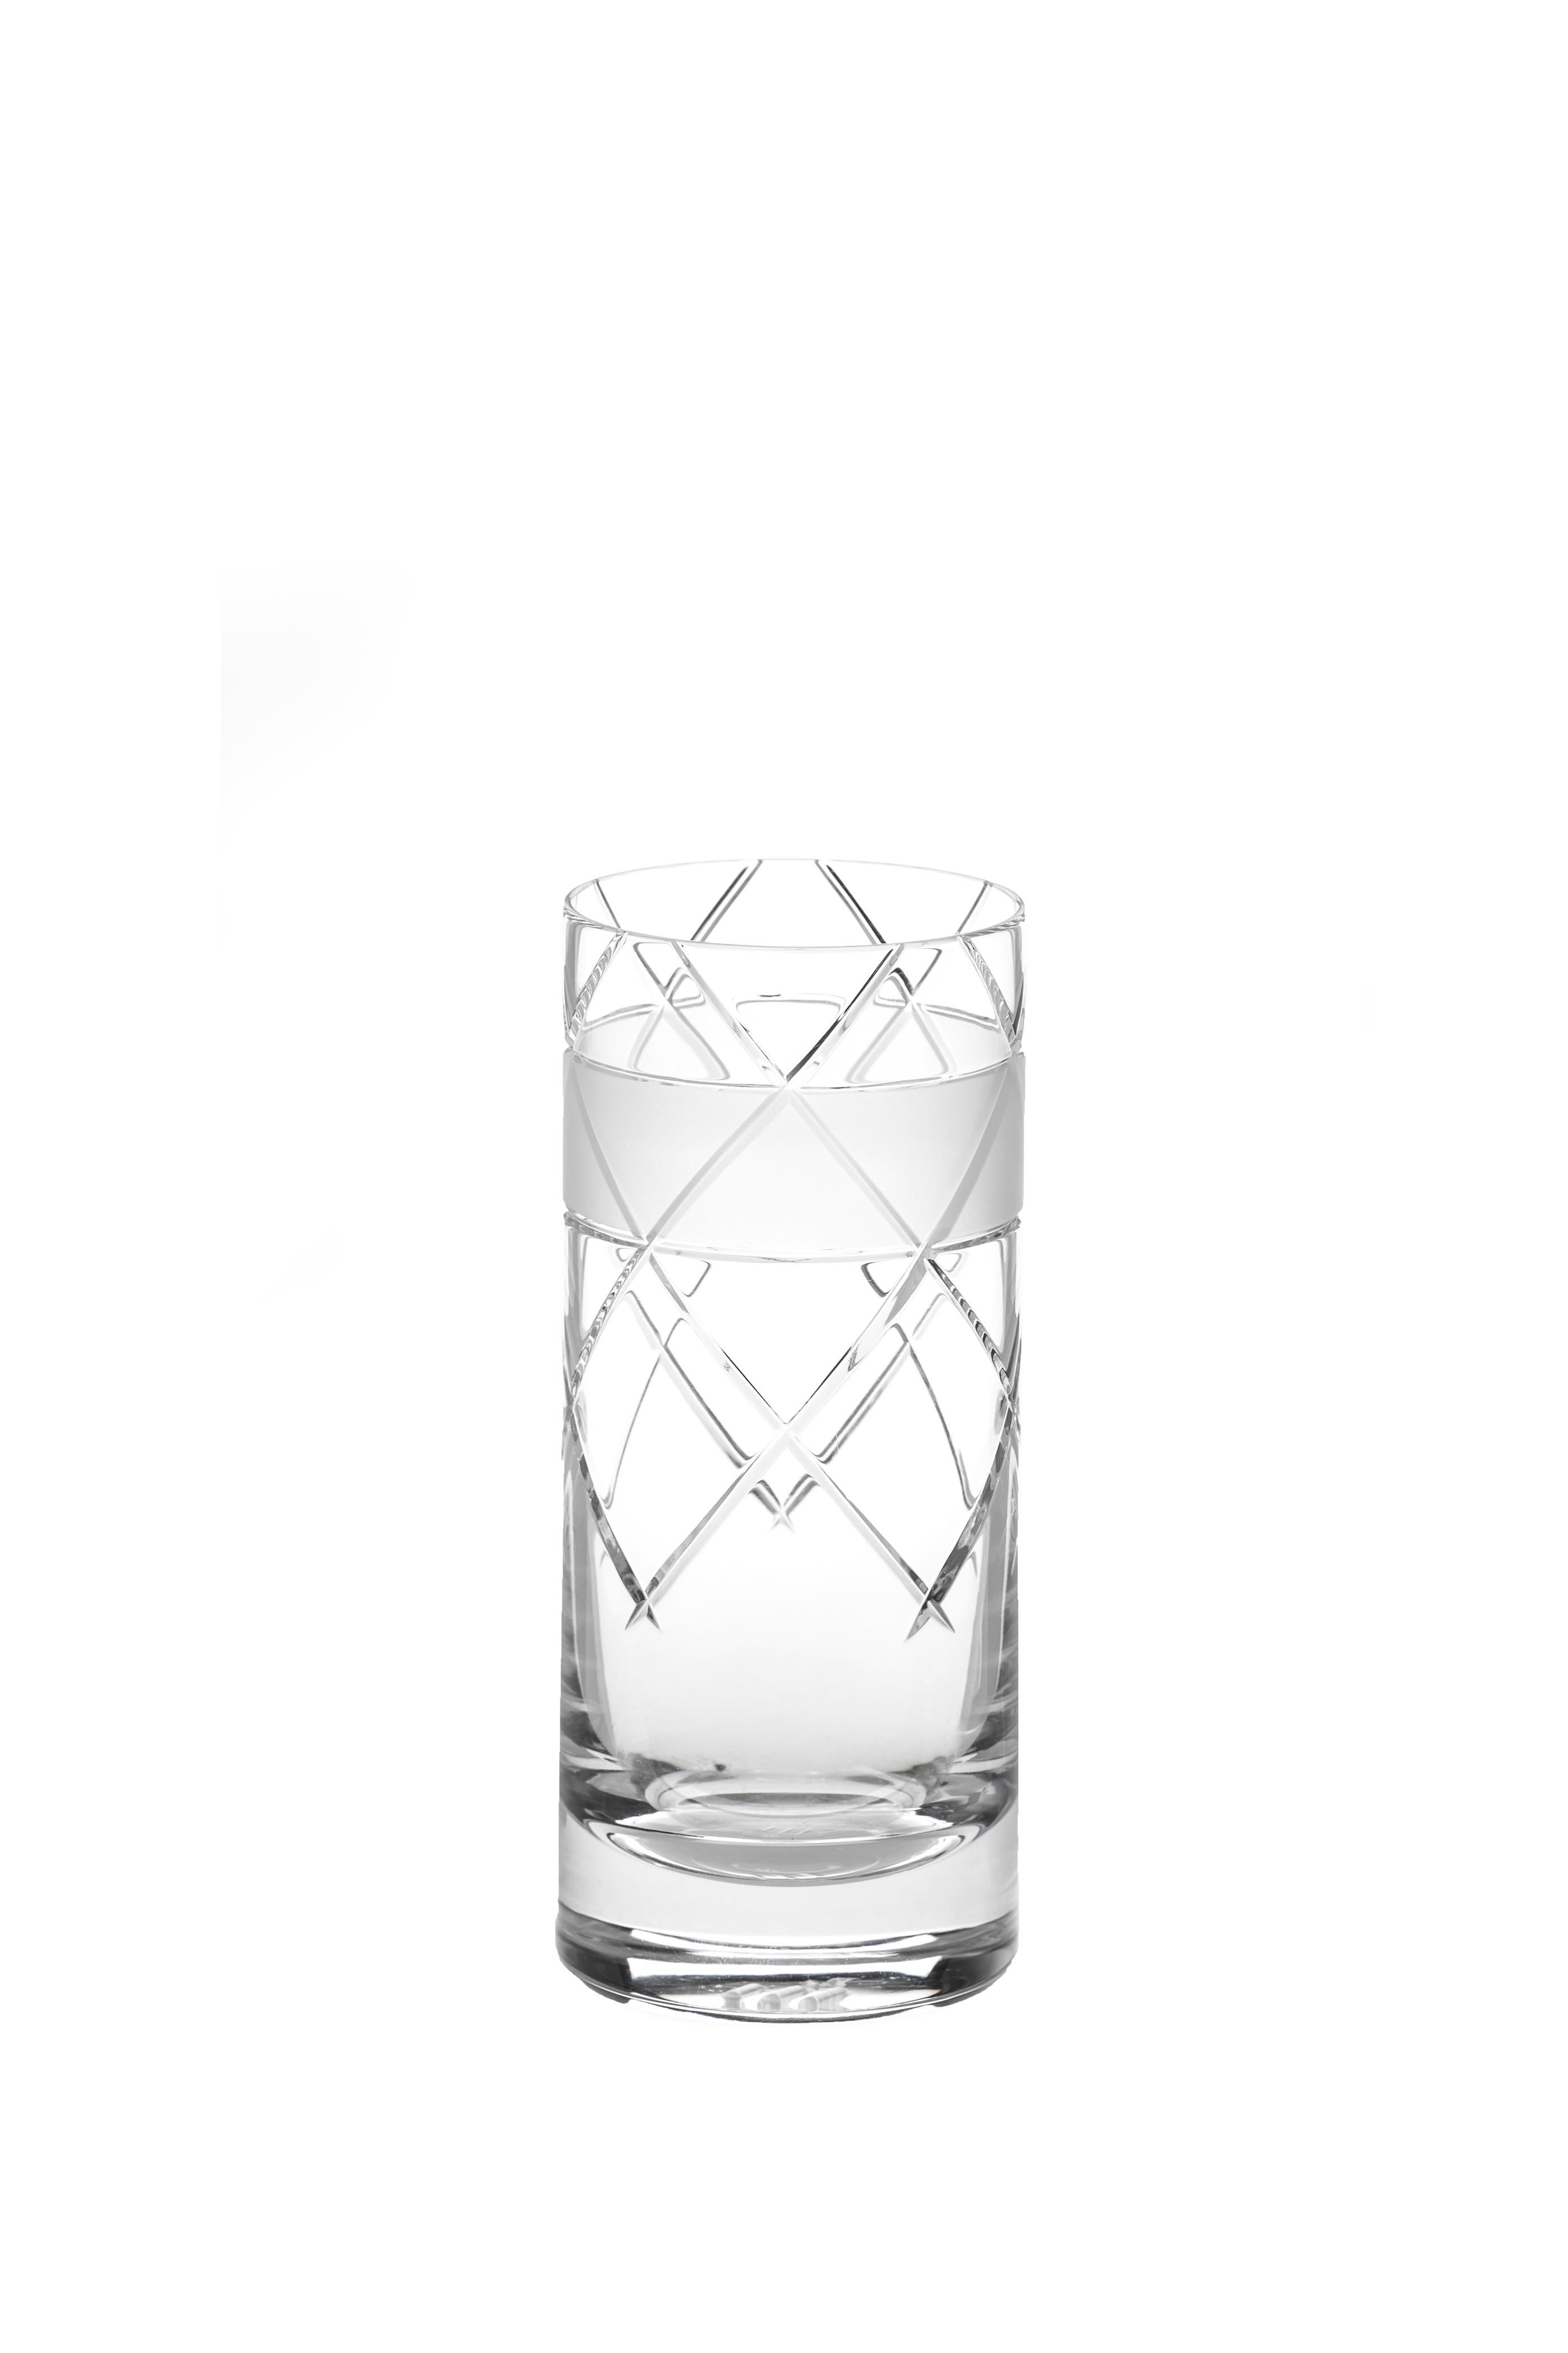 Contemporary Scholten & Baijings Handmade Irish Crystal High Glass Elements Series CUT NO V For Sale